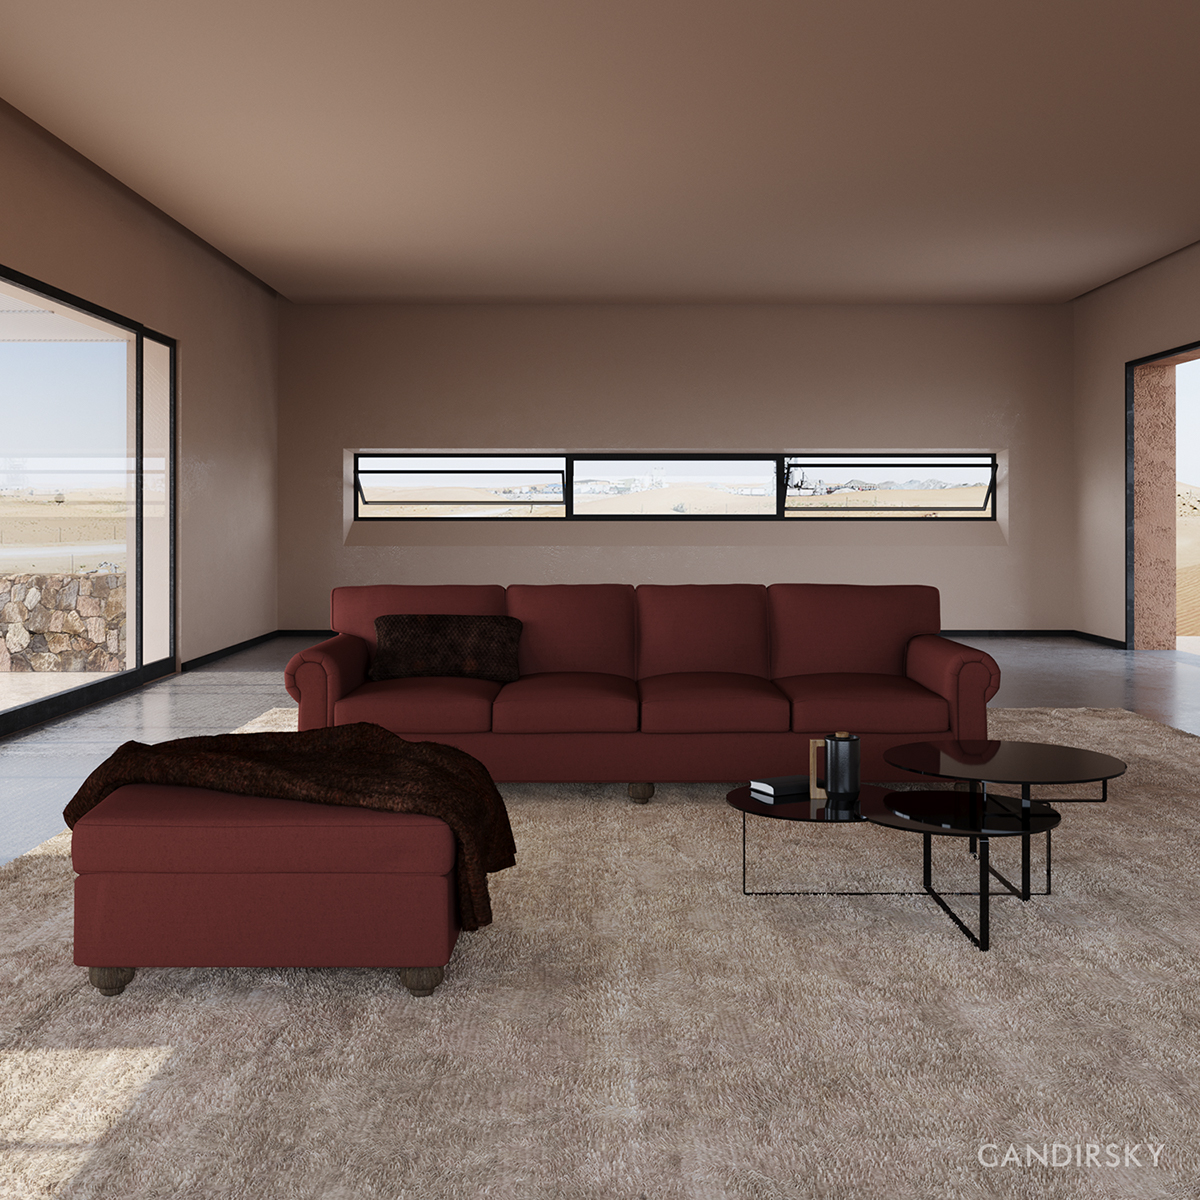 interiors lifestyle visualization furniture visualization architectural visualization product visualization